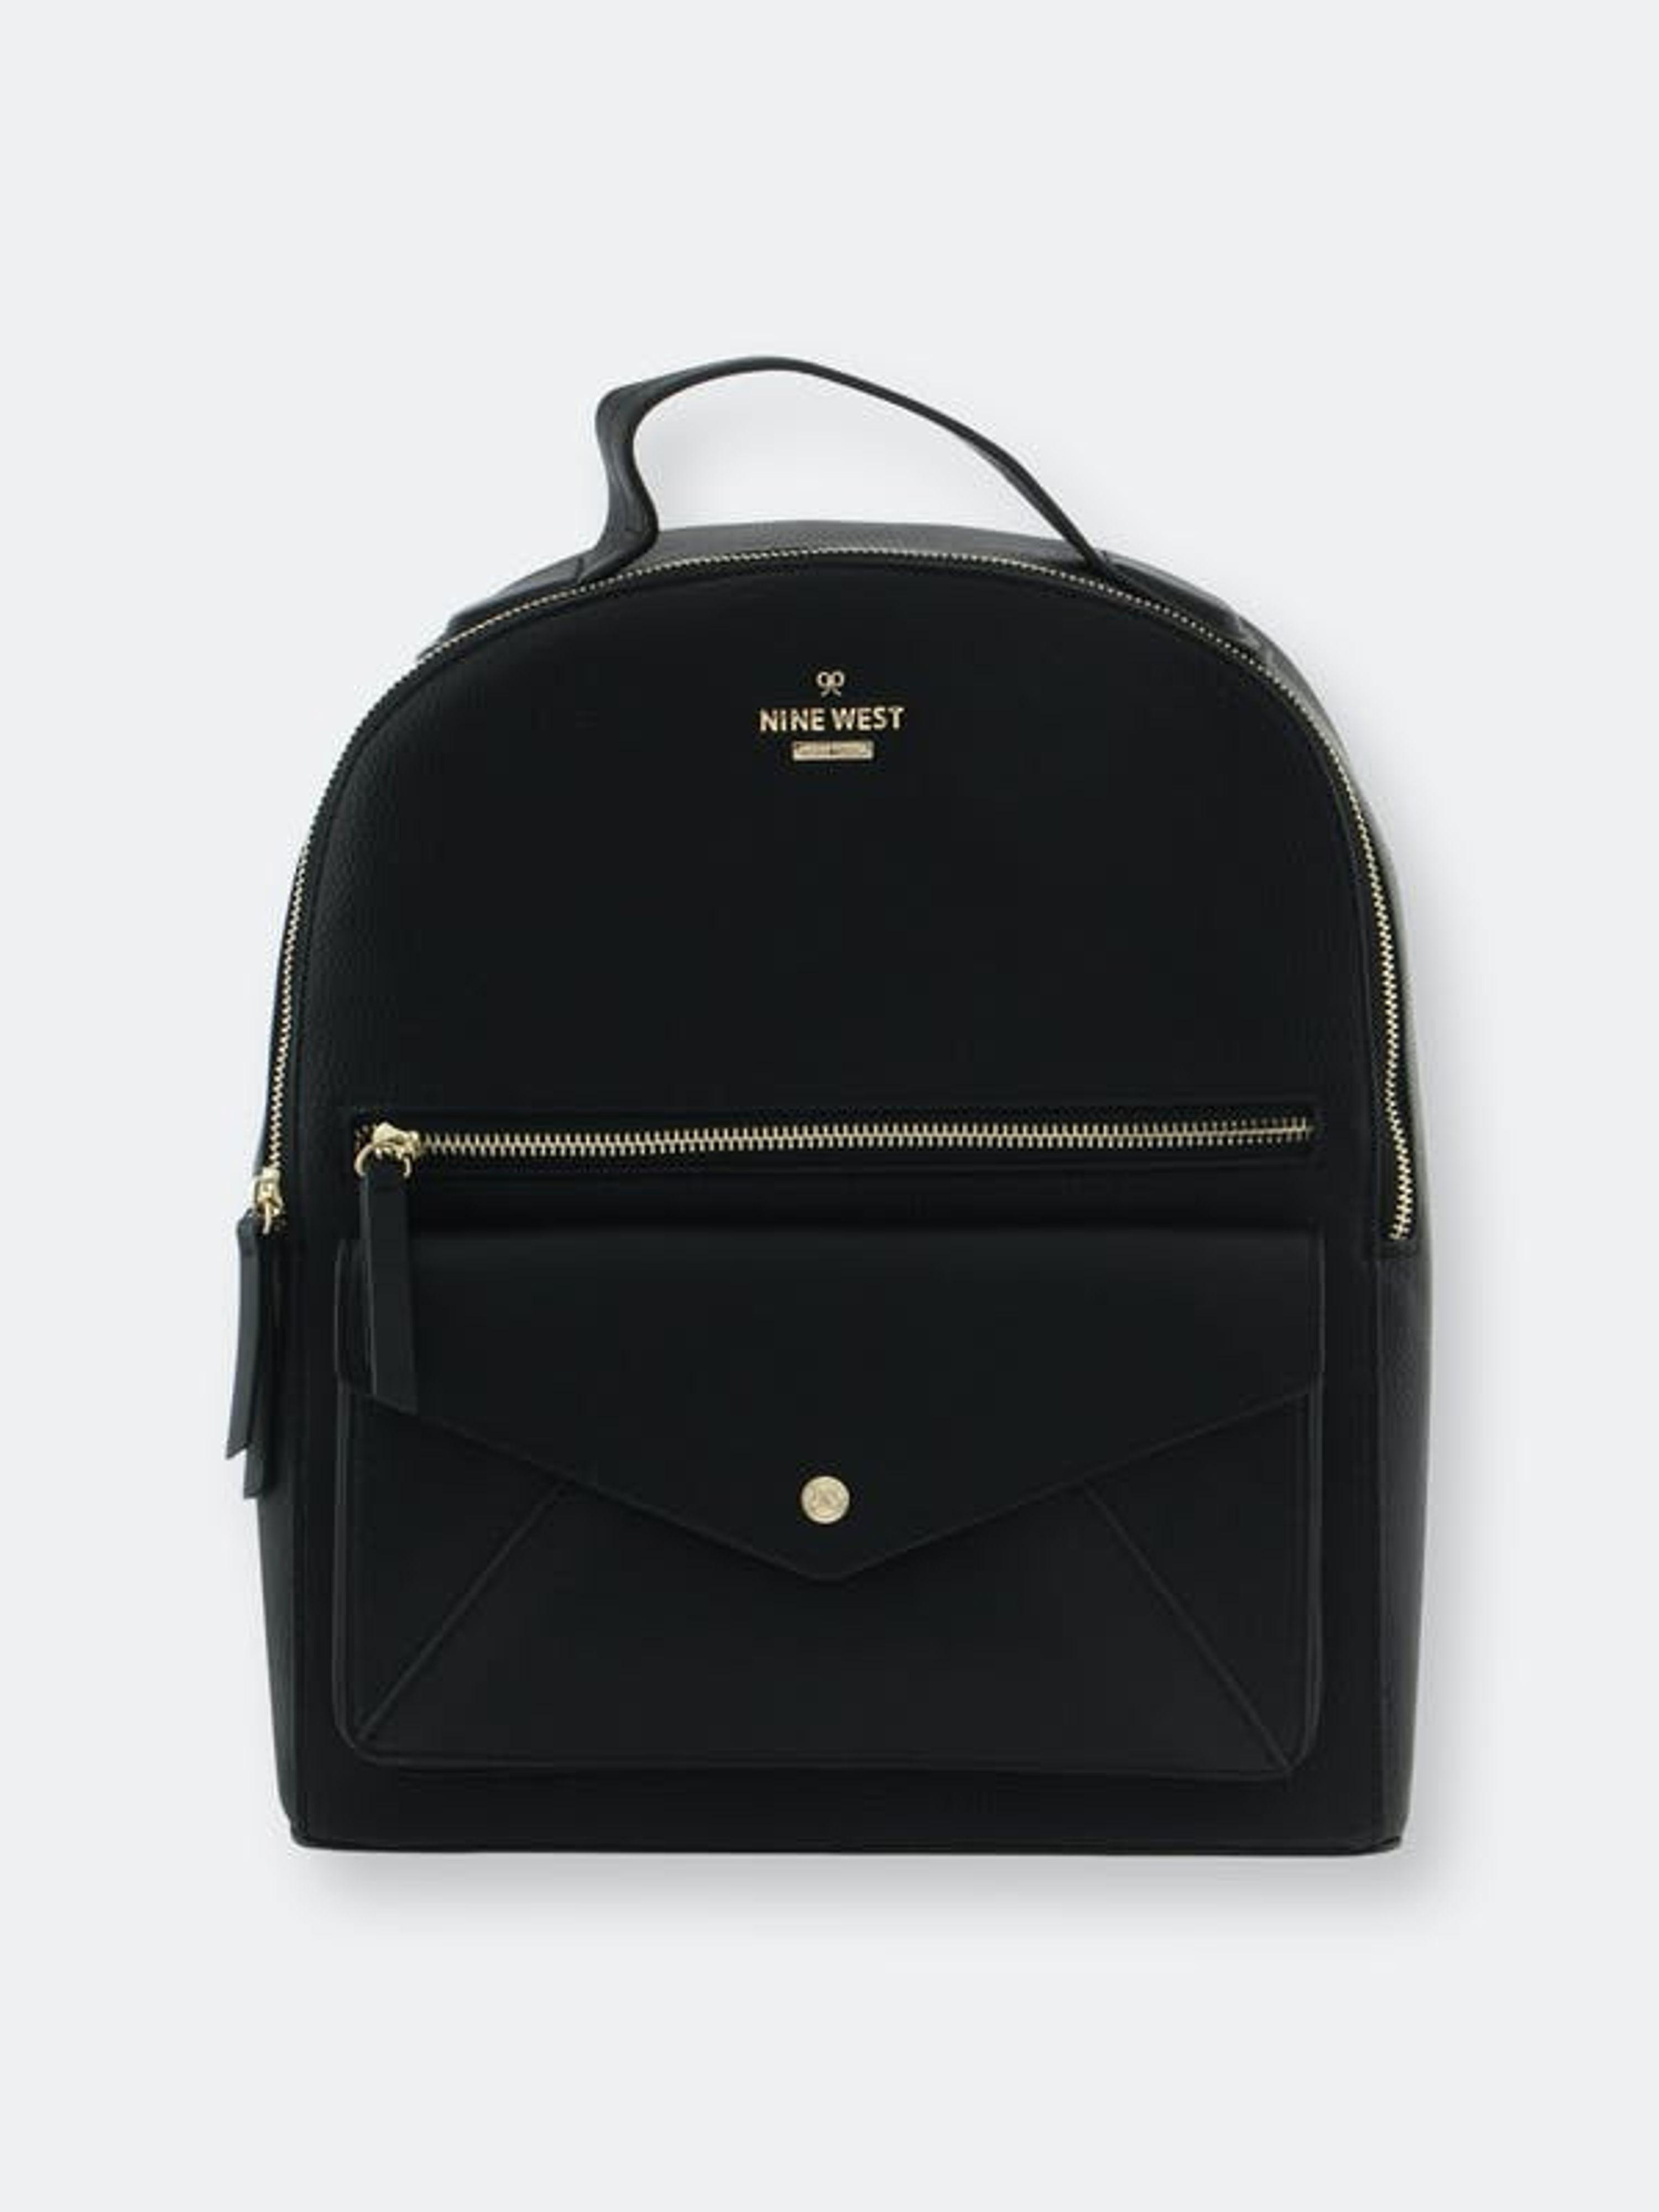 Nine West Small Backpack Purse - 10.5x7x3 | eBay